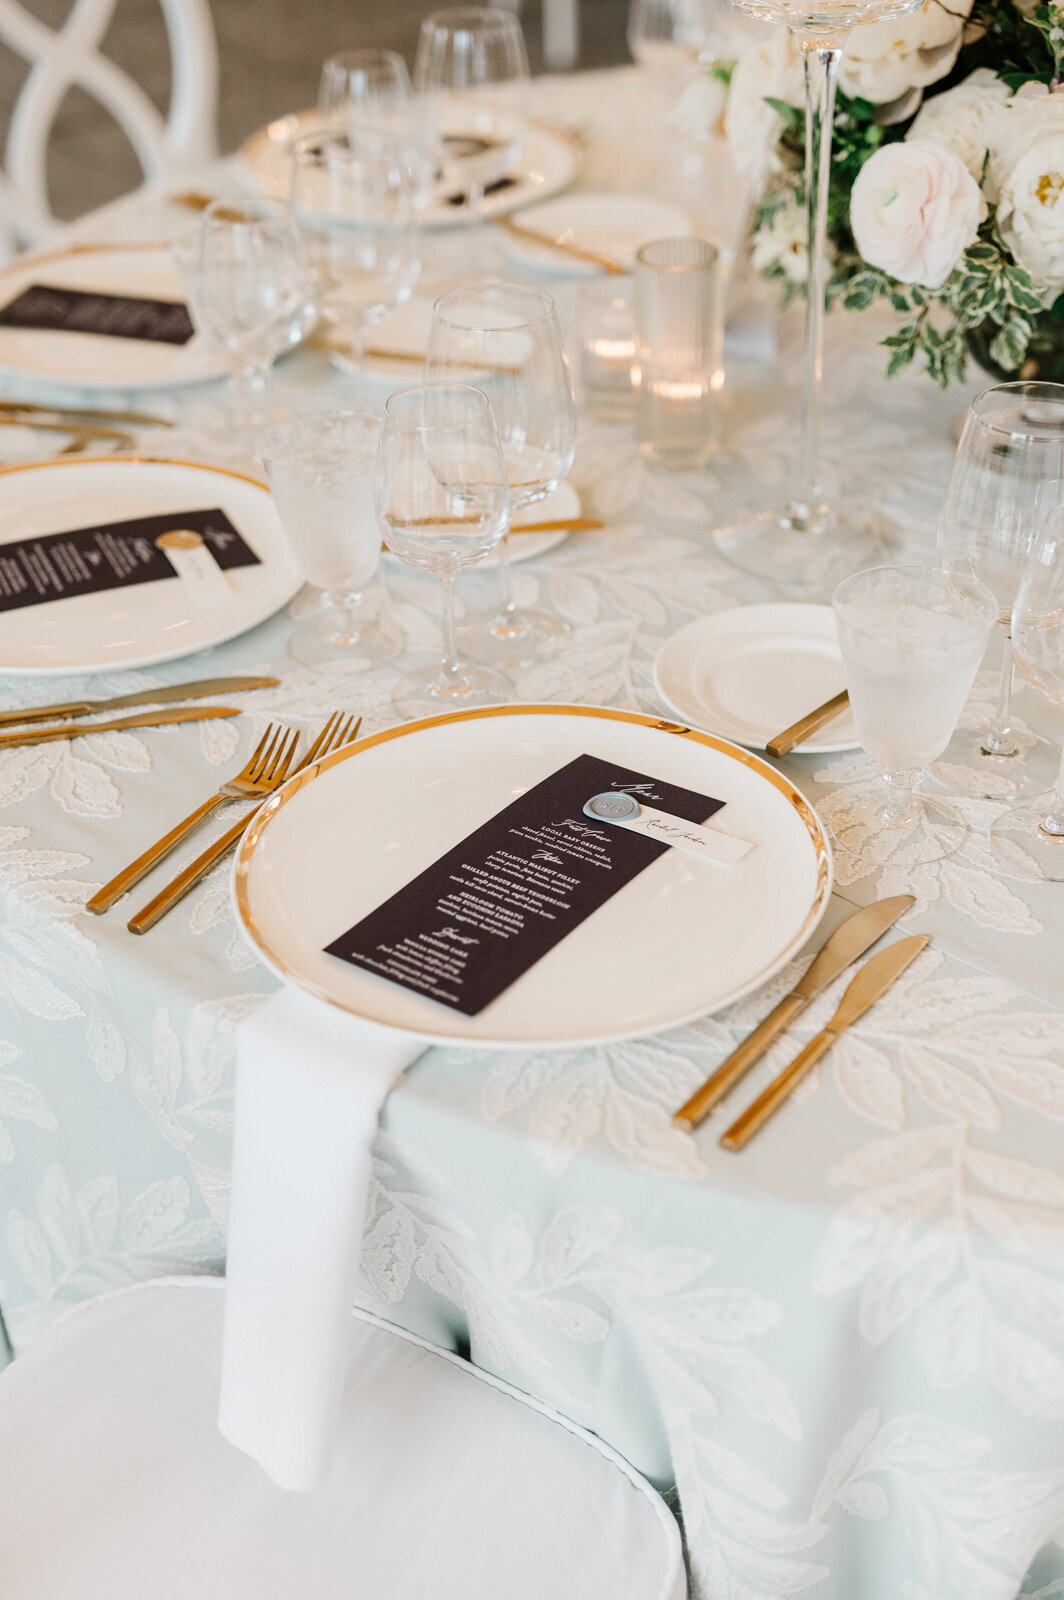 Kate-Murtaugh-Events-Newport-RI-Castle-Hill-Inn-Sperry-tent-wedding-planner-tablescape-blue